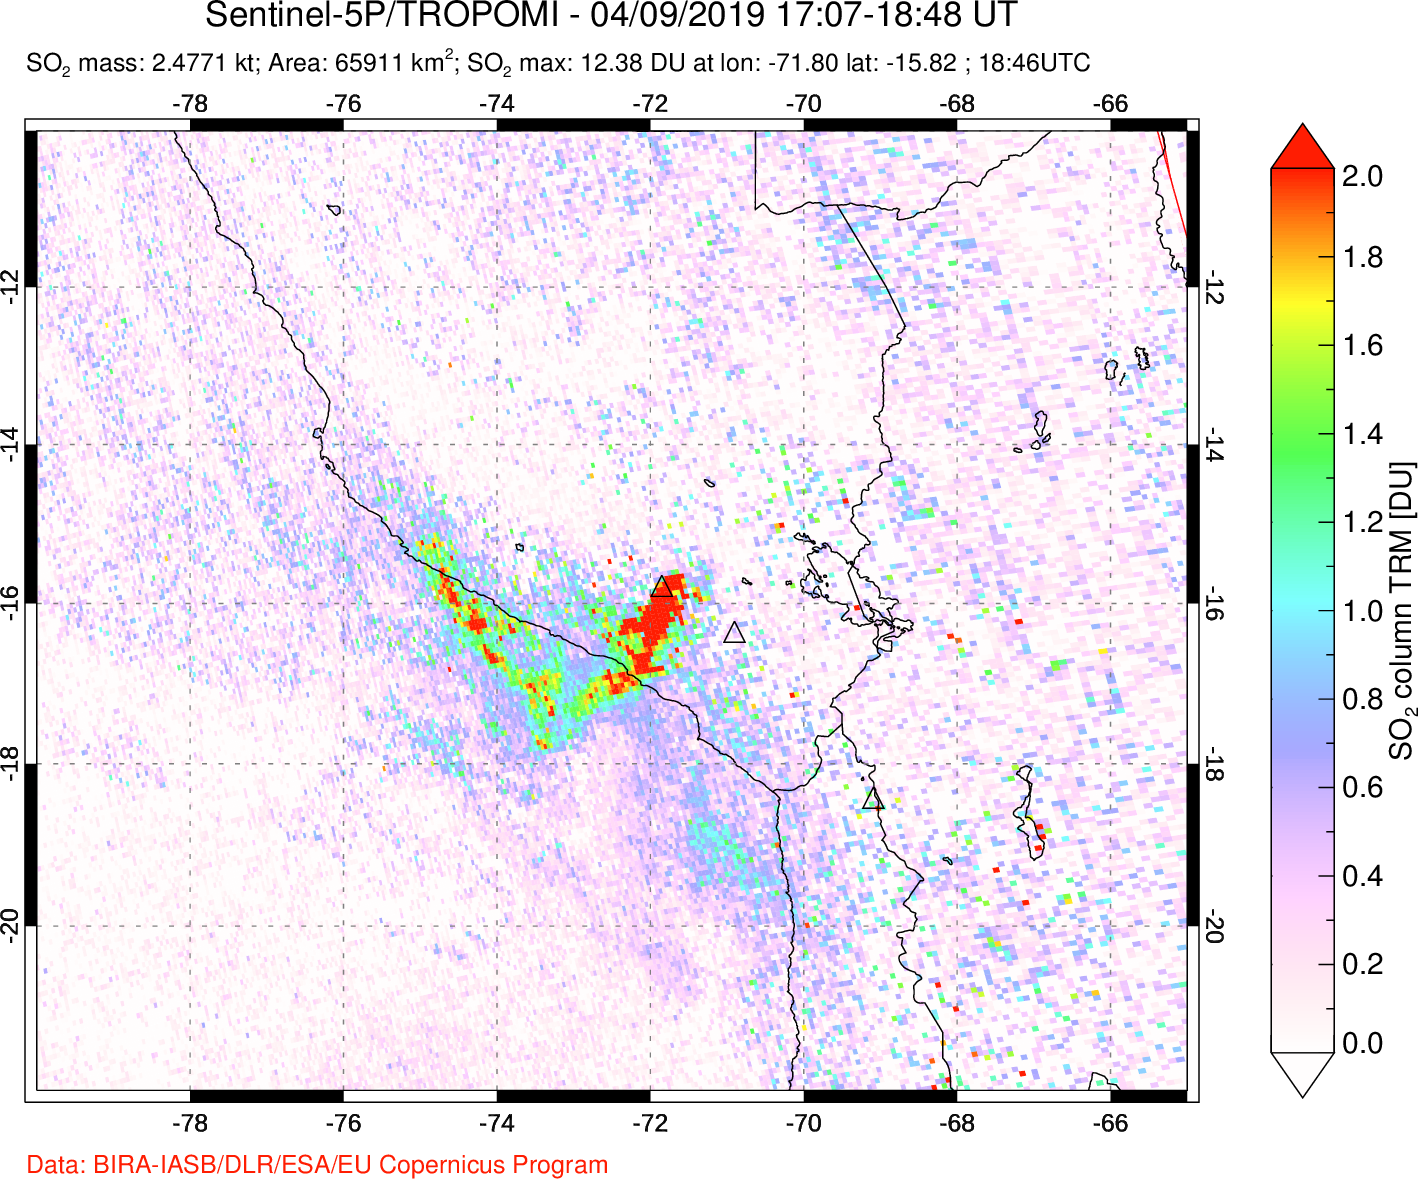 A sulfur dioxide image over Peru on Apr 09, 2019.